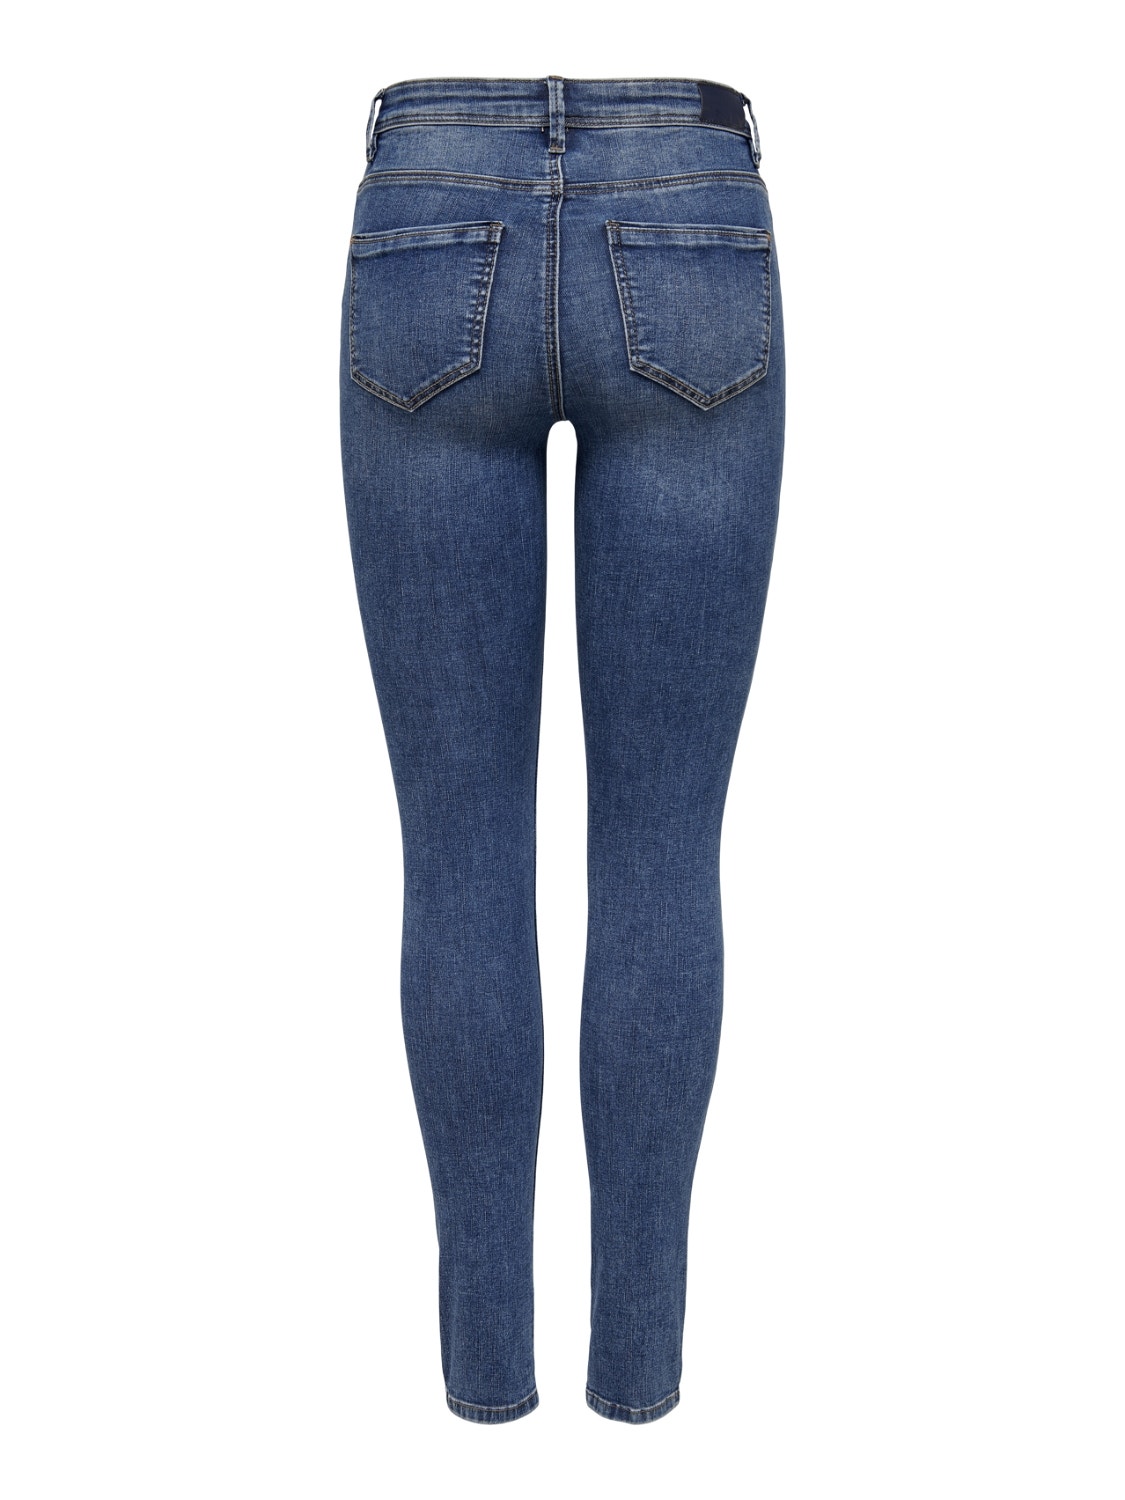 ONLY Skinny Fit Mid waist Destroyed hems Jeans -Dark Blue Denim - 15263734